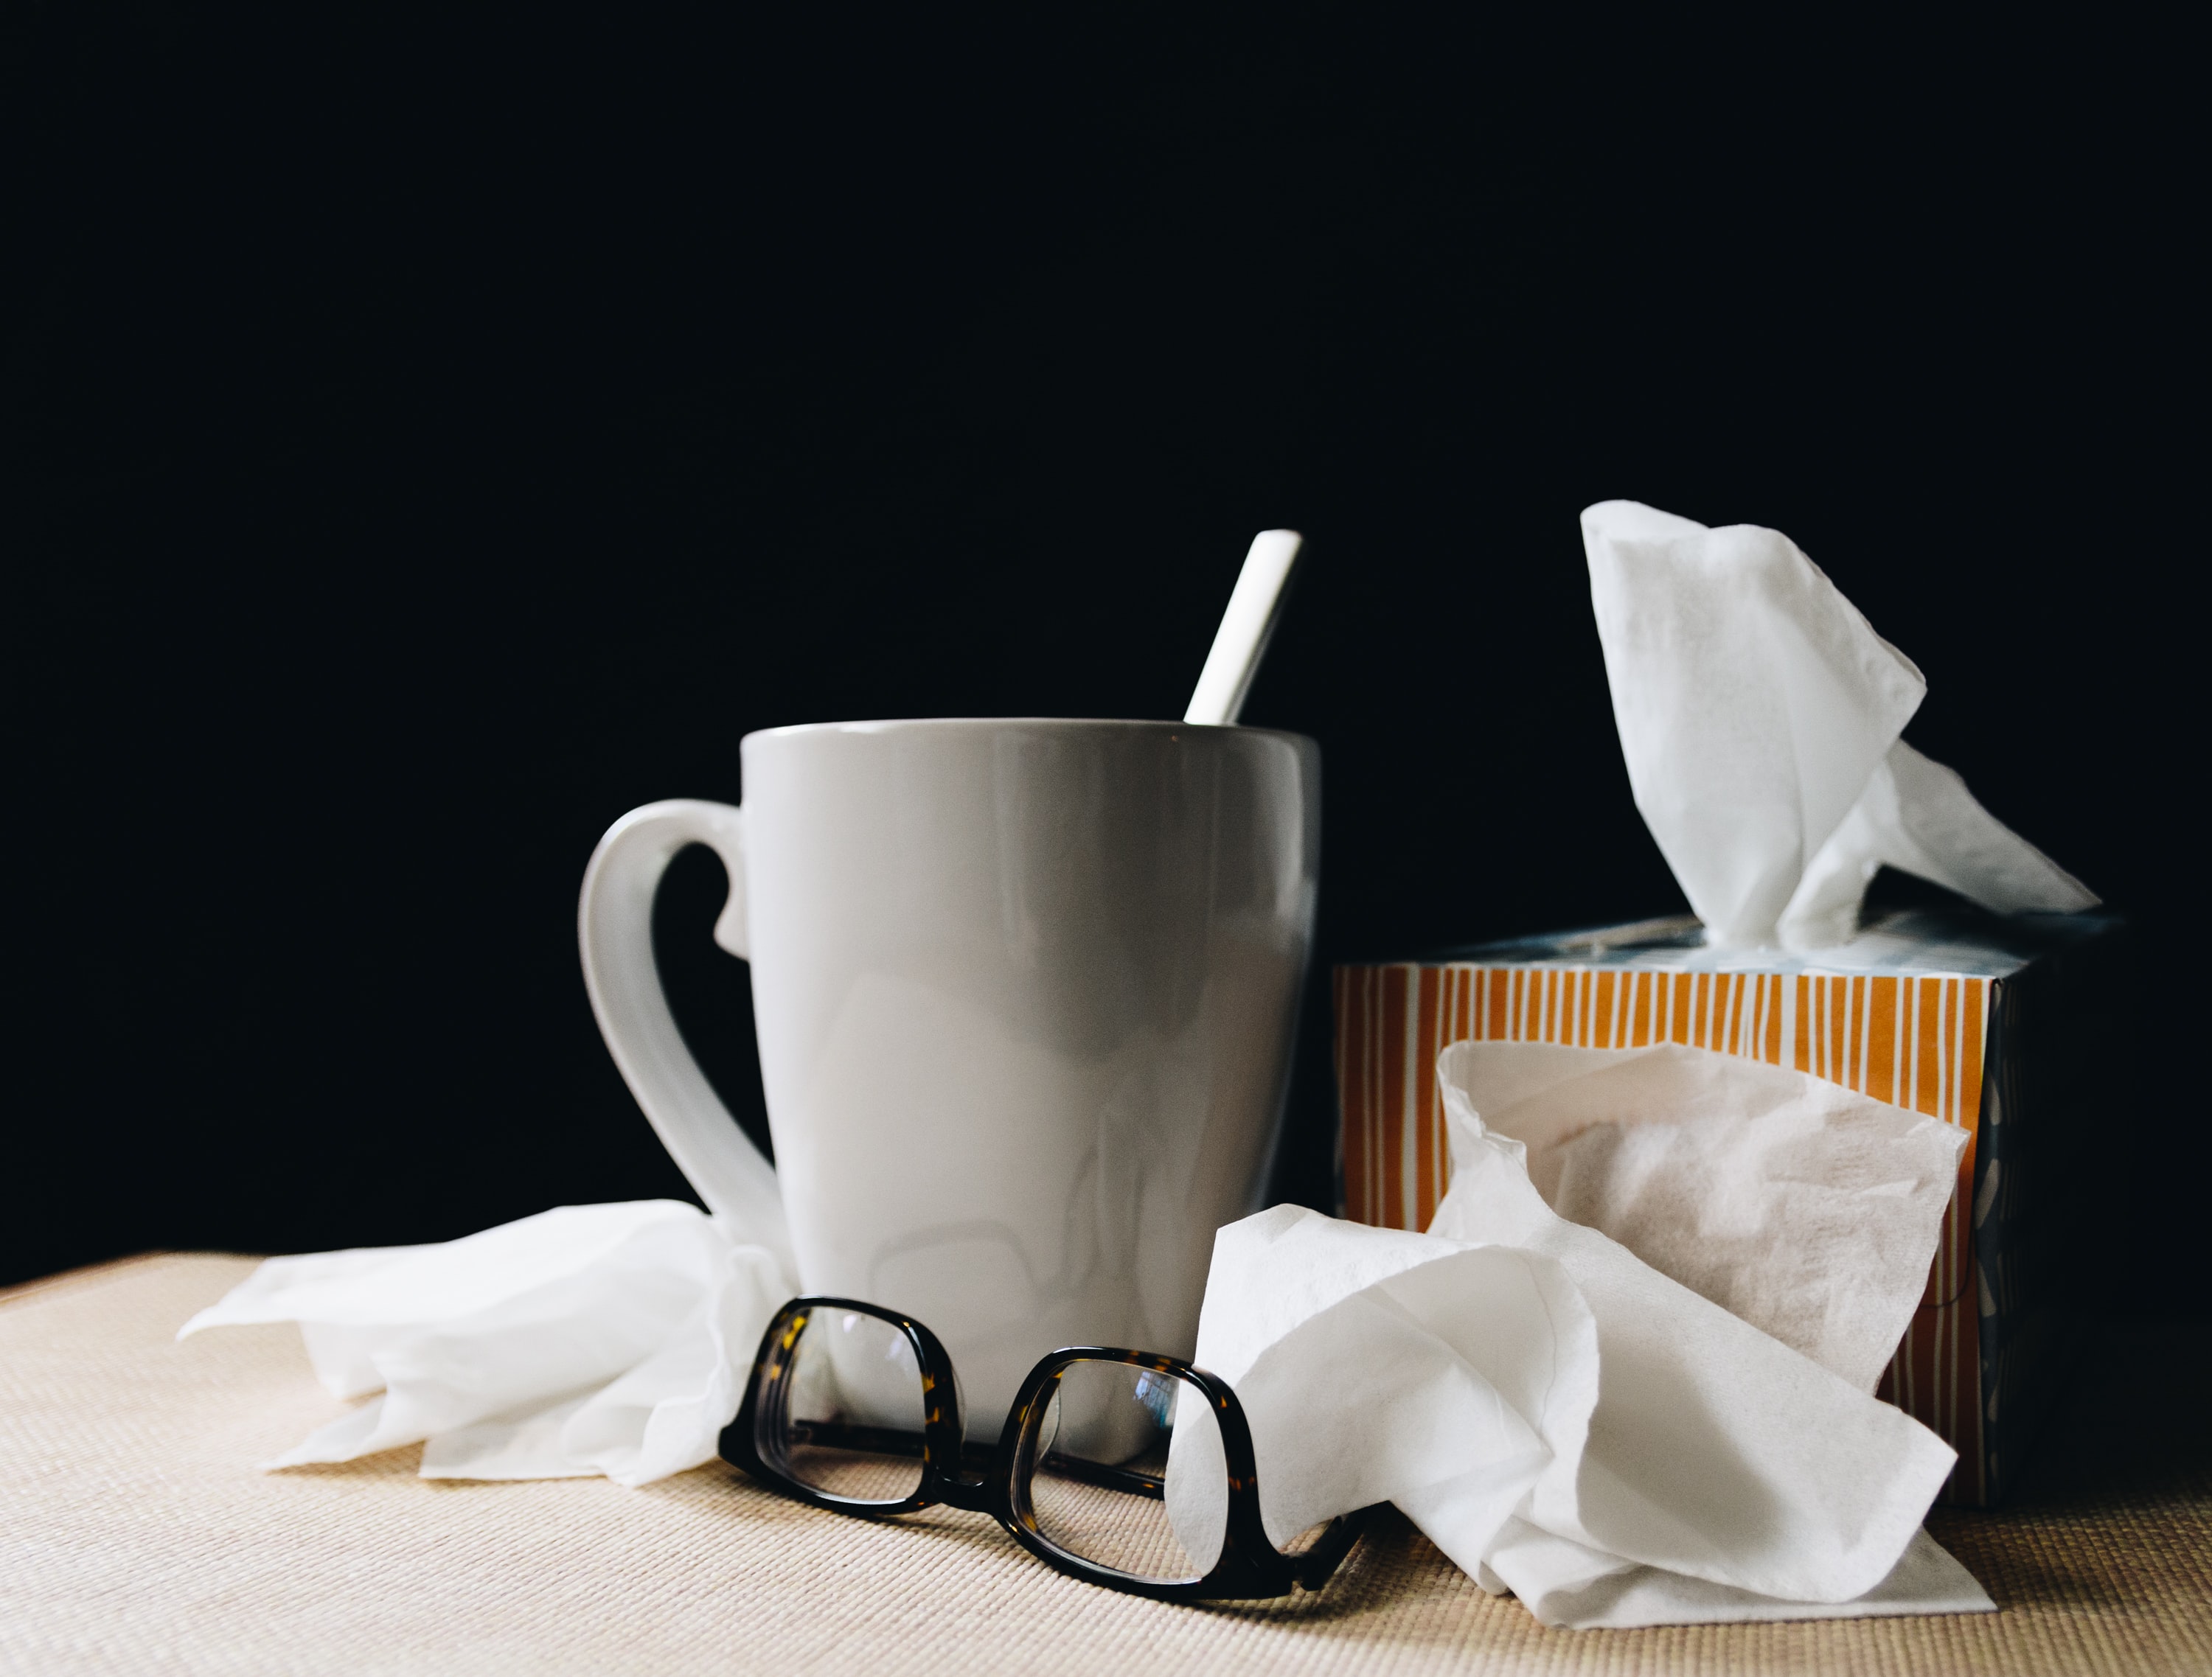 How to Prepare for the Flu Season